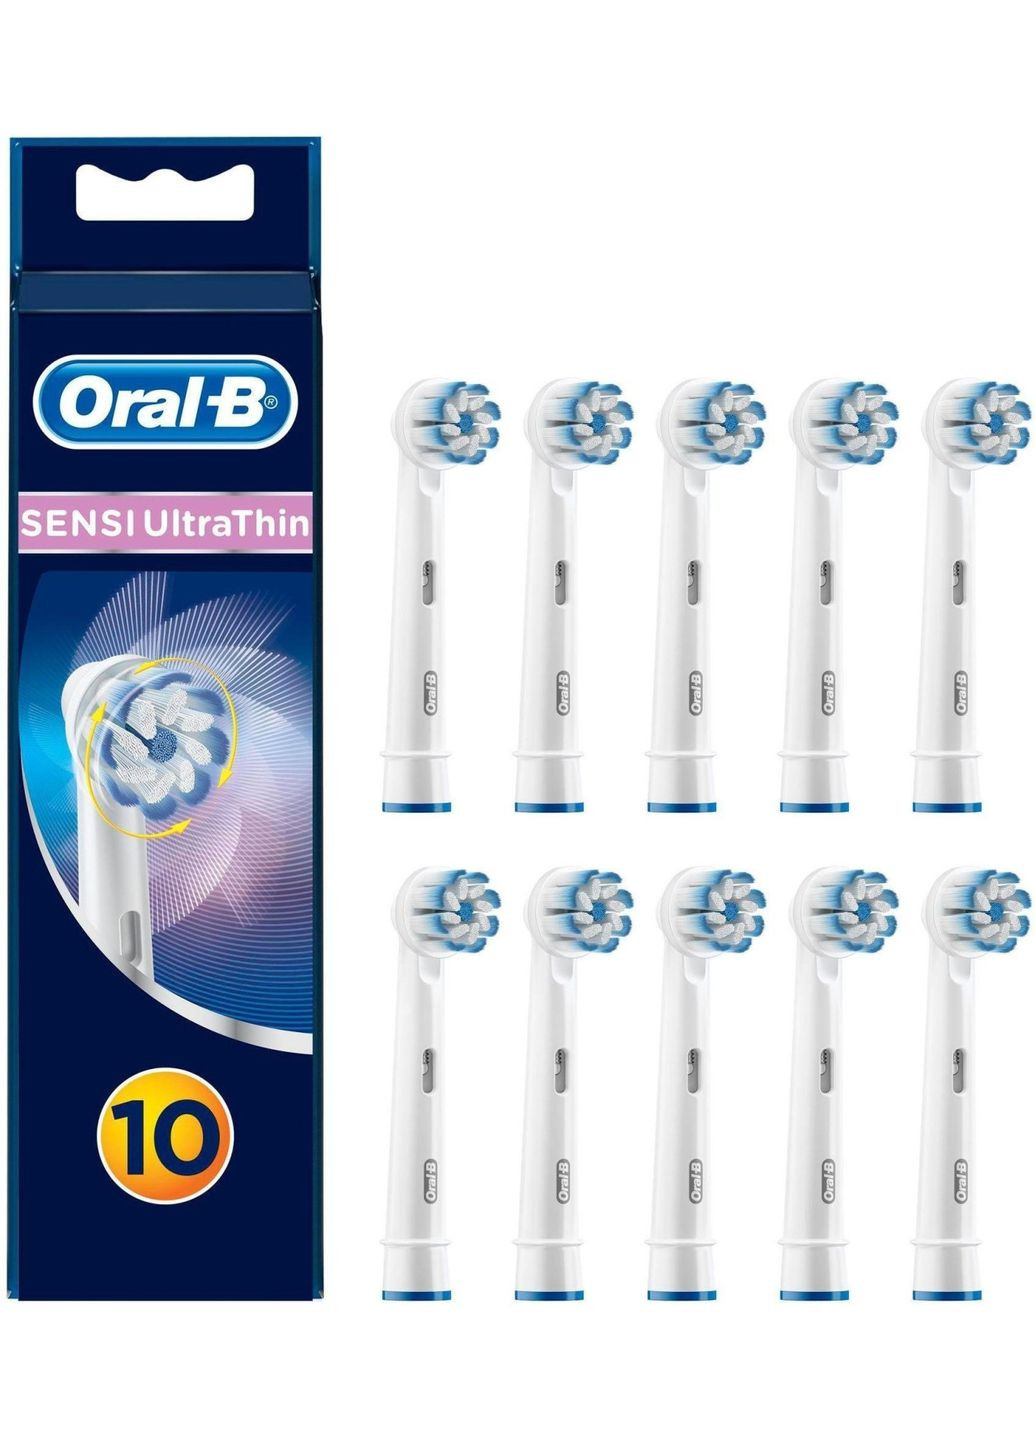 Насадки для электрических зубных щеток OralB Sensi UltraThin (10 шт) Oral-B (280265719)